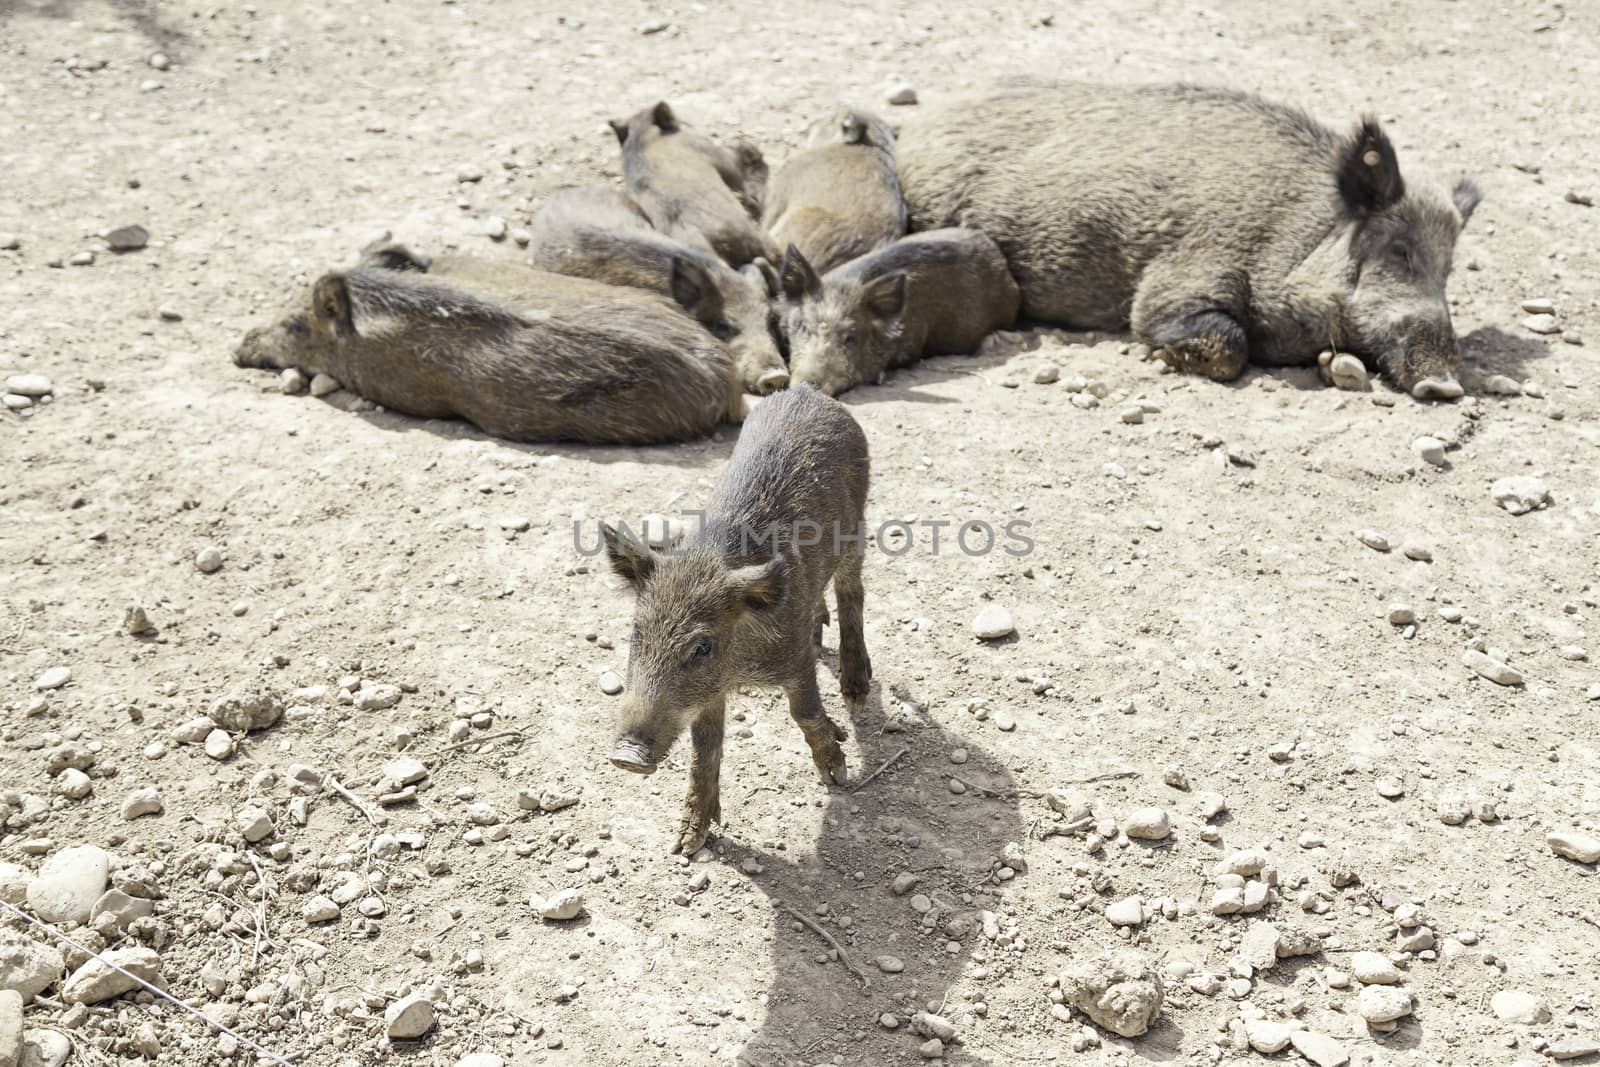 Herd of wild pigs, detail of mammals in captivity, animal farming